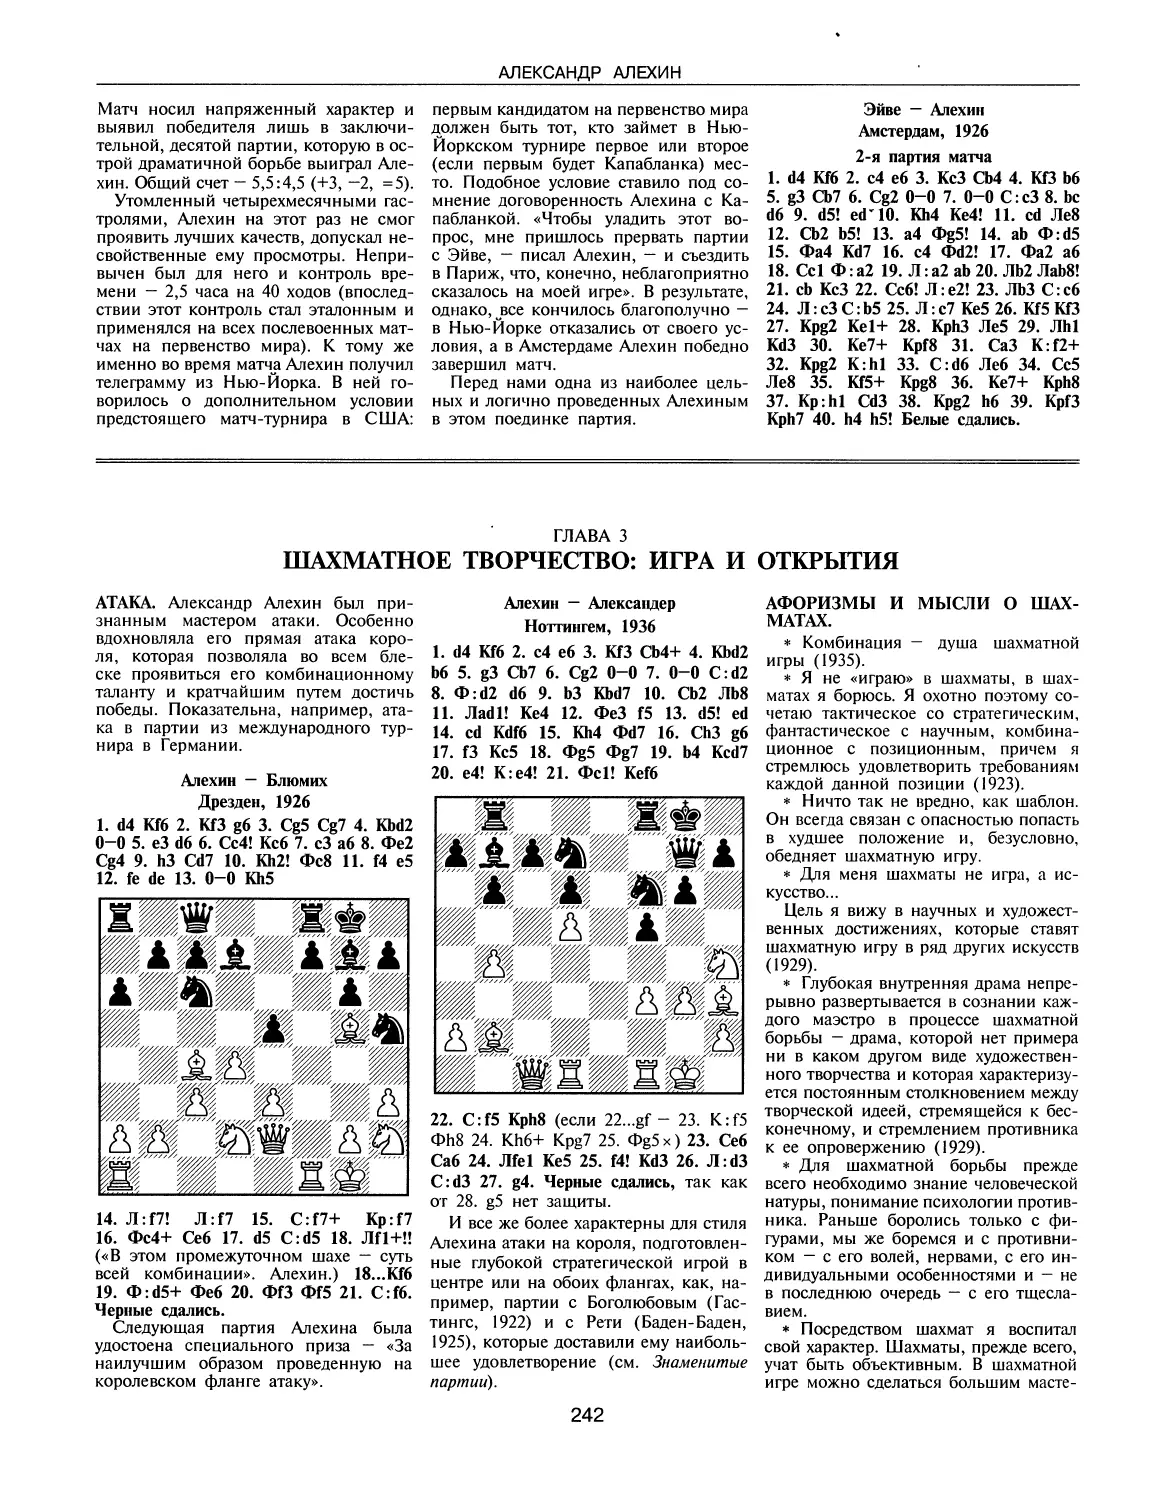 ГЛАВА 3. Шахматное творчество: игра и открытия
Афоризмы и мысли о шахматах